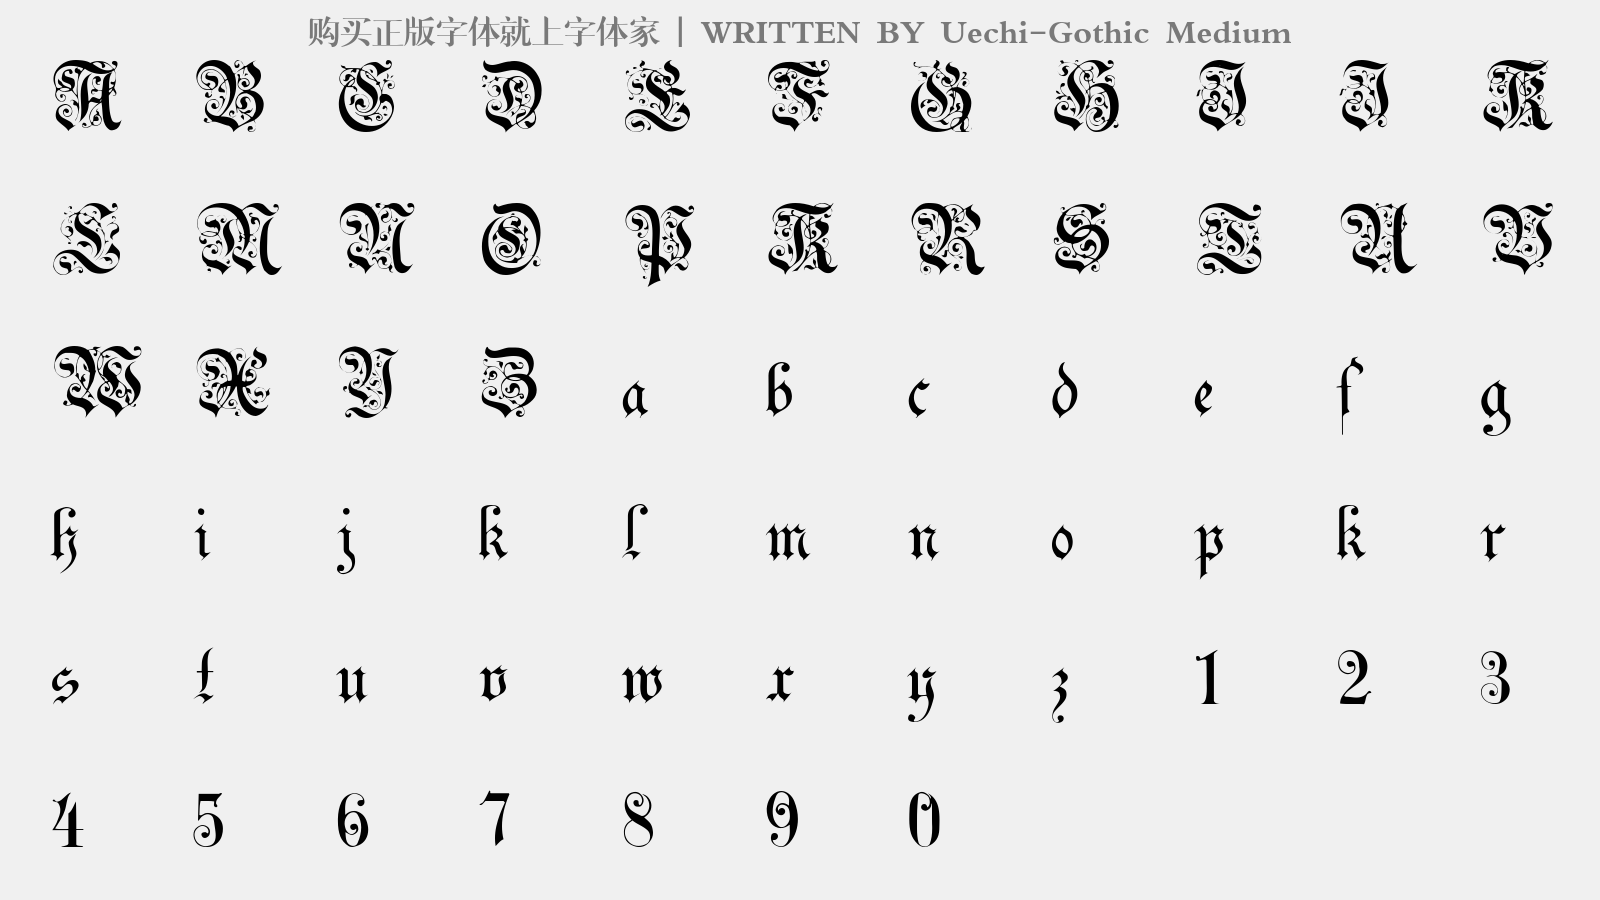 Uechi-Gothic Medium - 大写字母/小写字母/数字